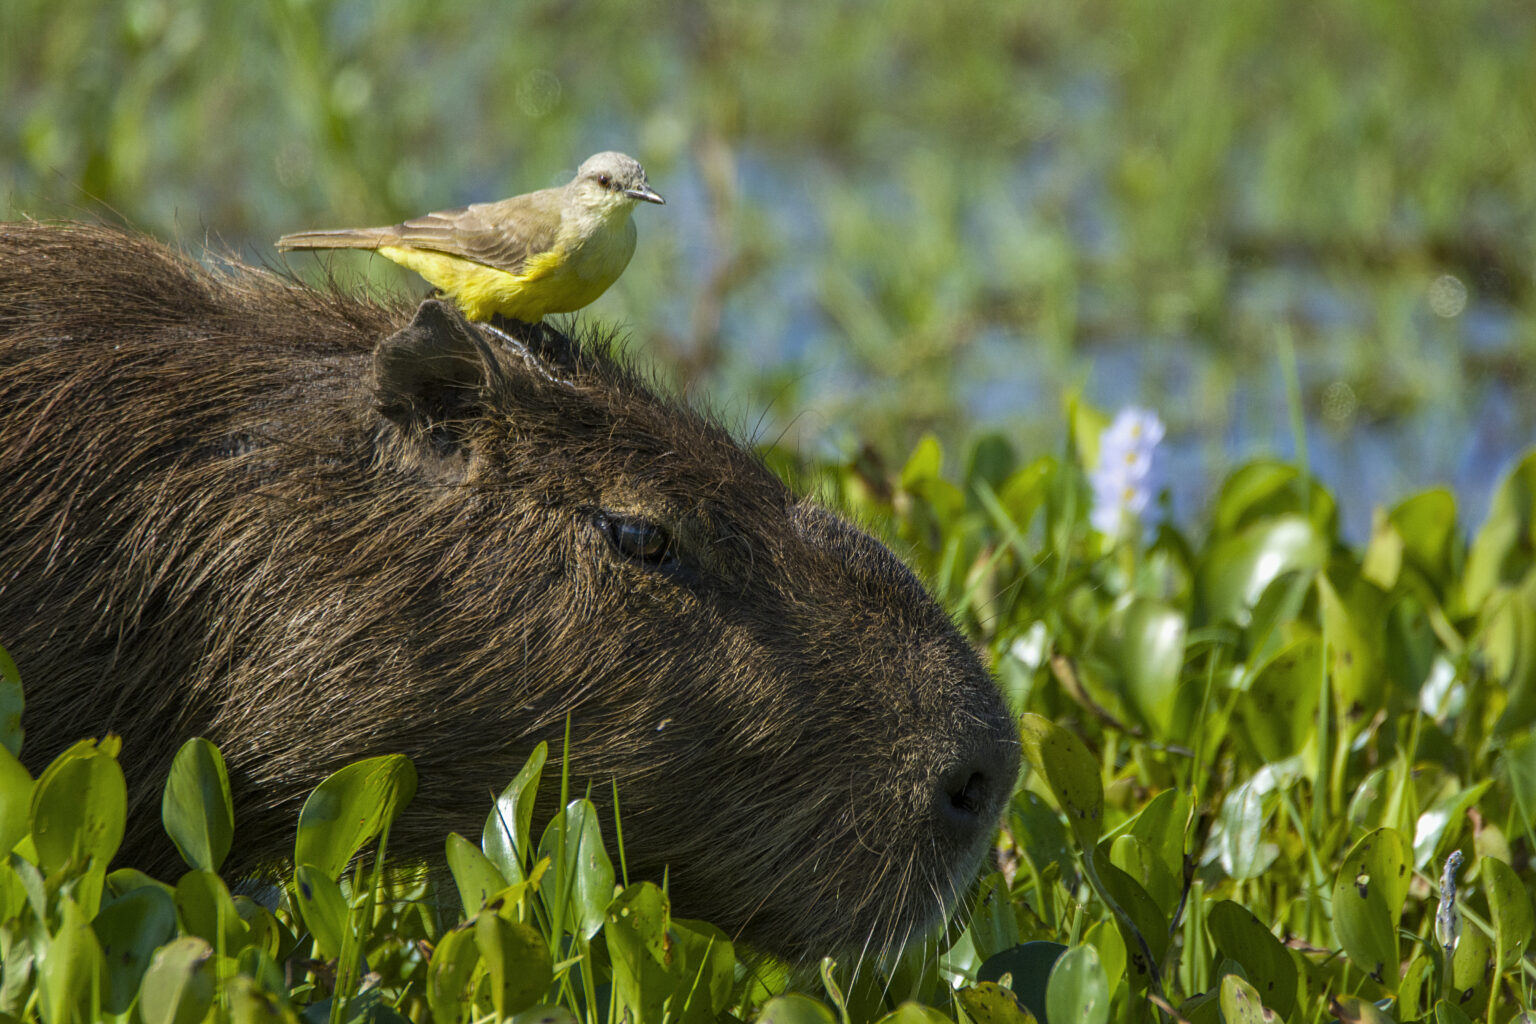 Close up of capybara with yellow bird on its head